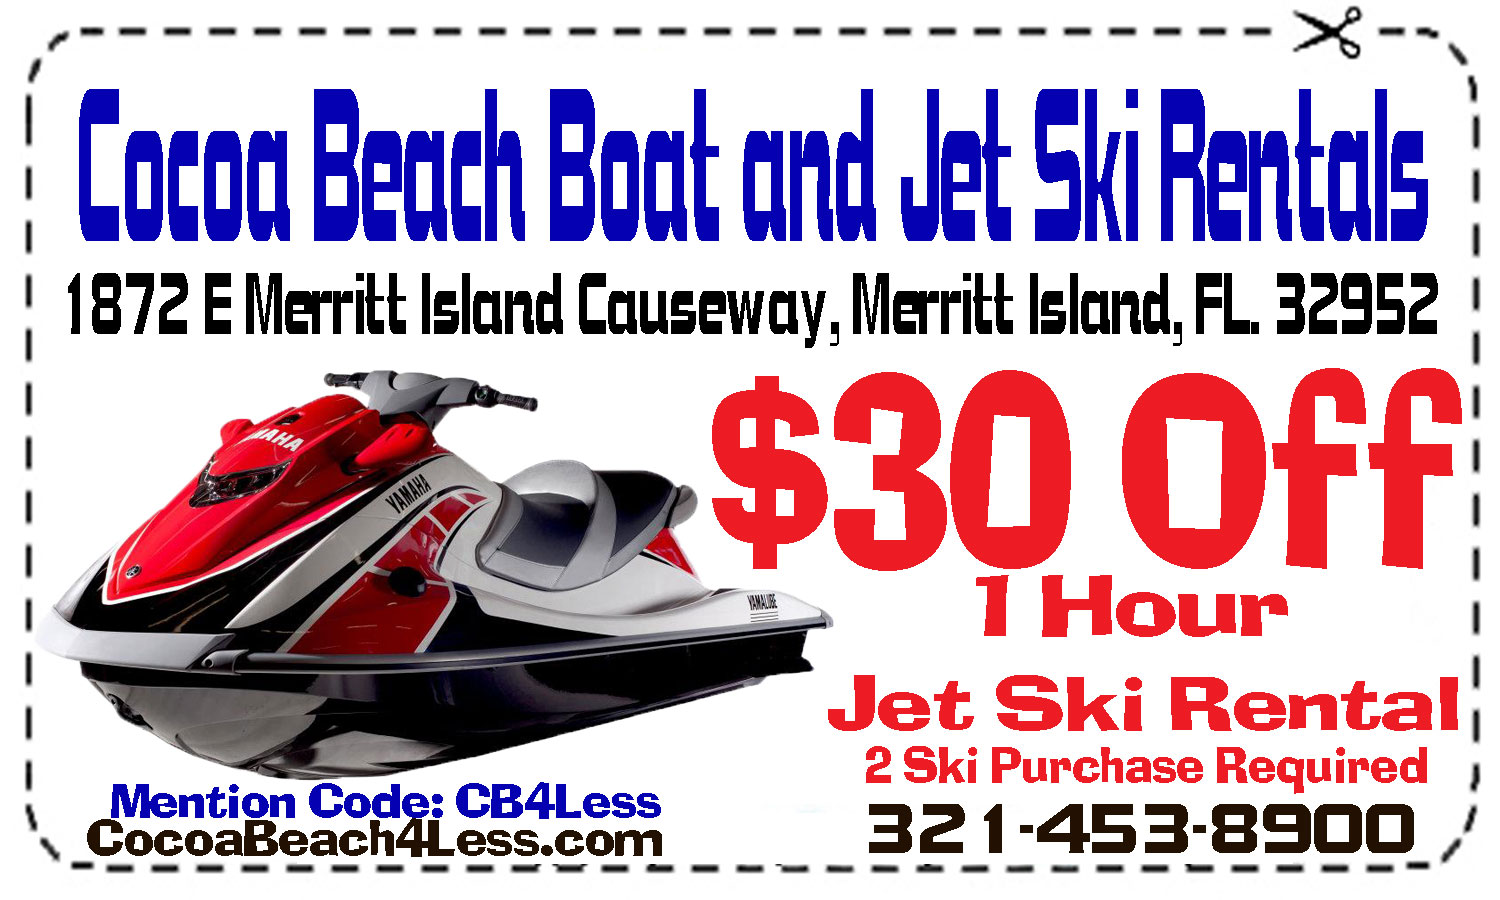 Cocoa Beach Jet Ski Rental Coupon - Cocoa Beach Jet Ski Rental Coupon –  $30